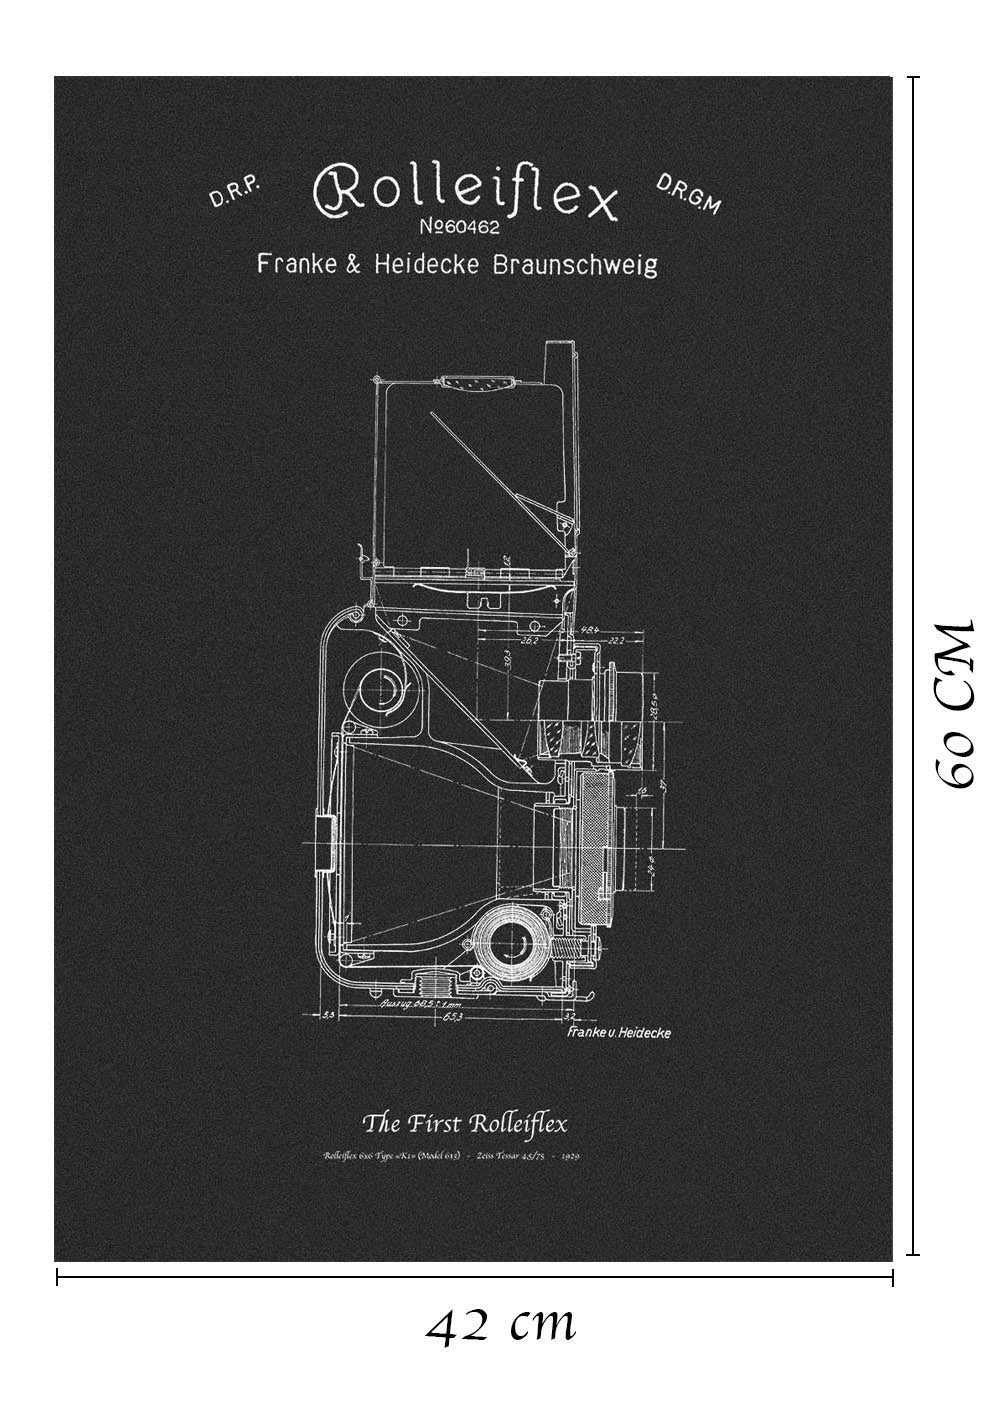 Premium 40x60cm Poster ---  Rolleiflex K1 1929  --- Technical drawing